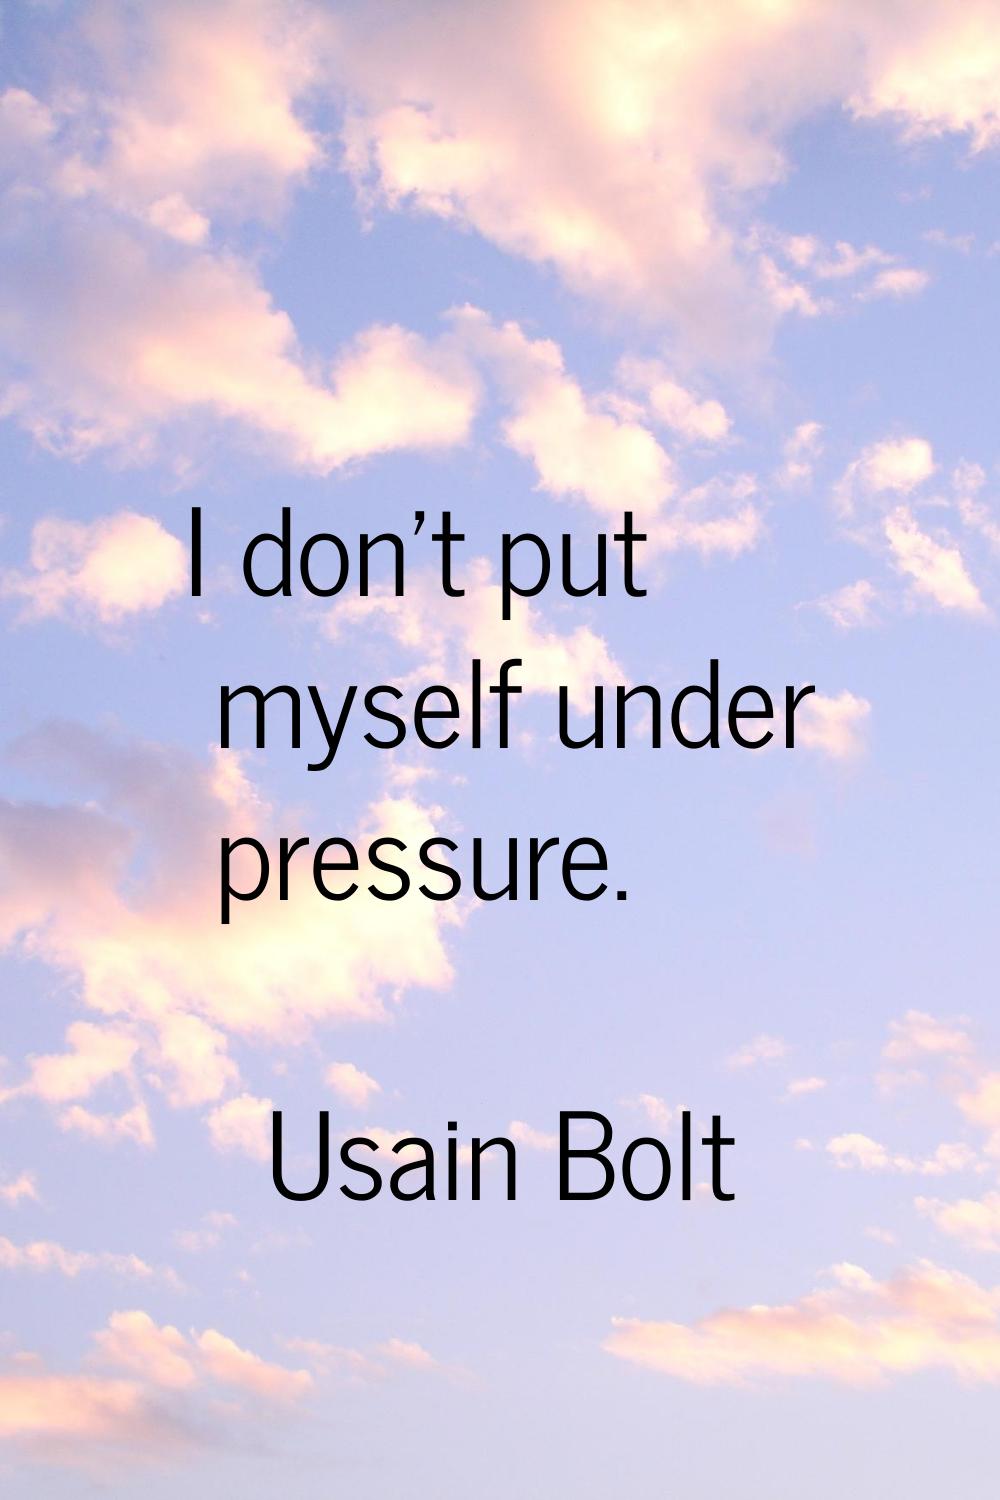 I don't put myself under pressure.